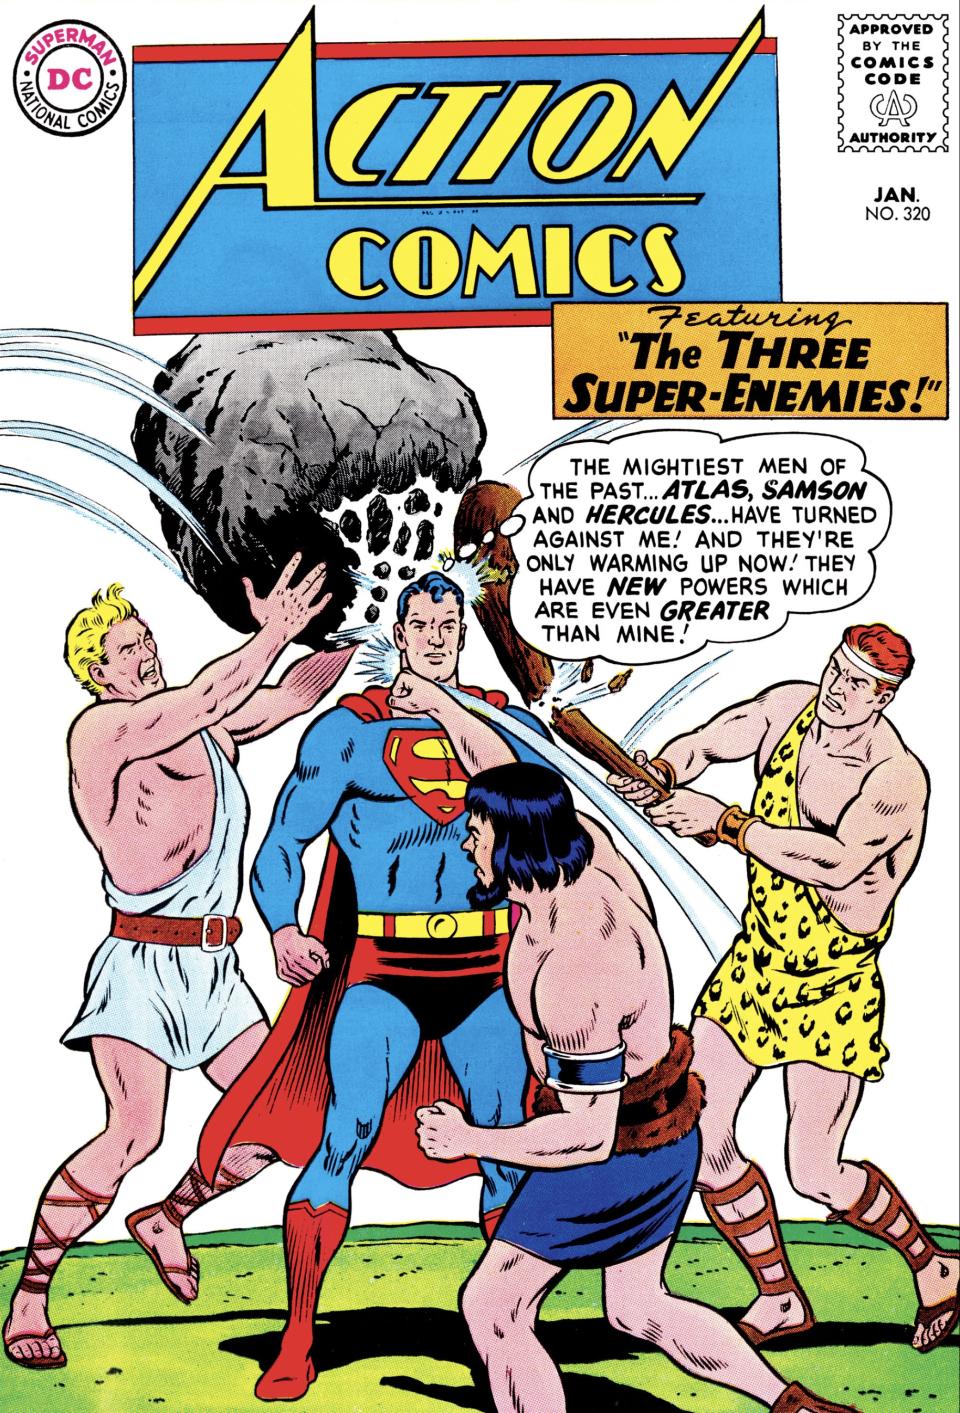 Action Comics #320 cover art